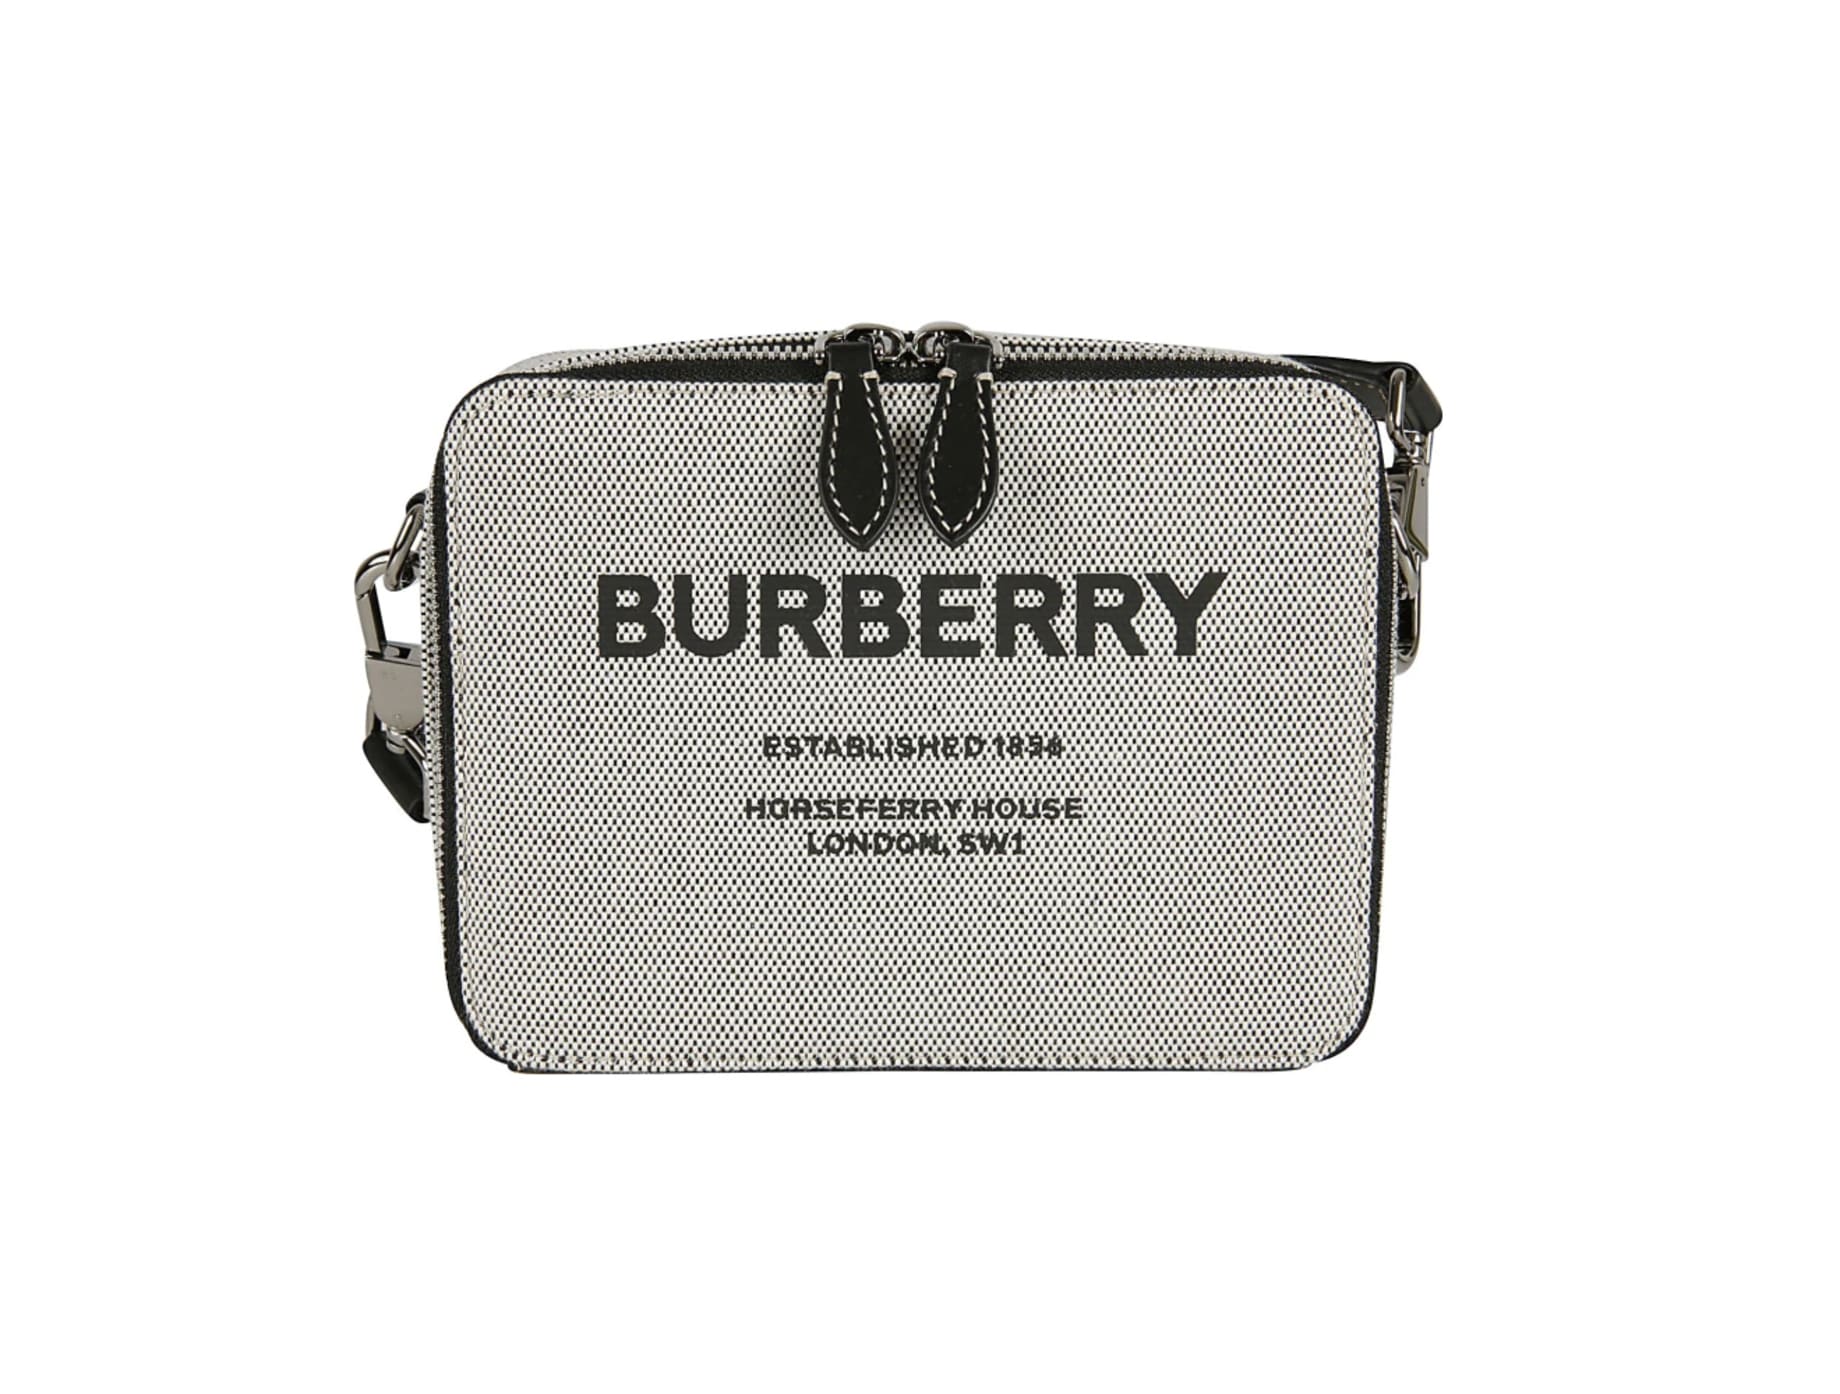 Shop Burberry for Men